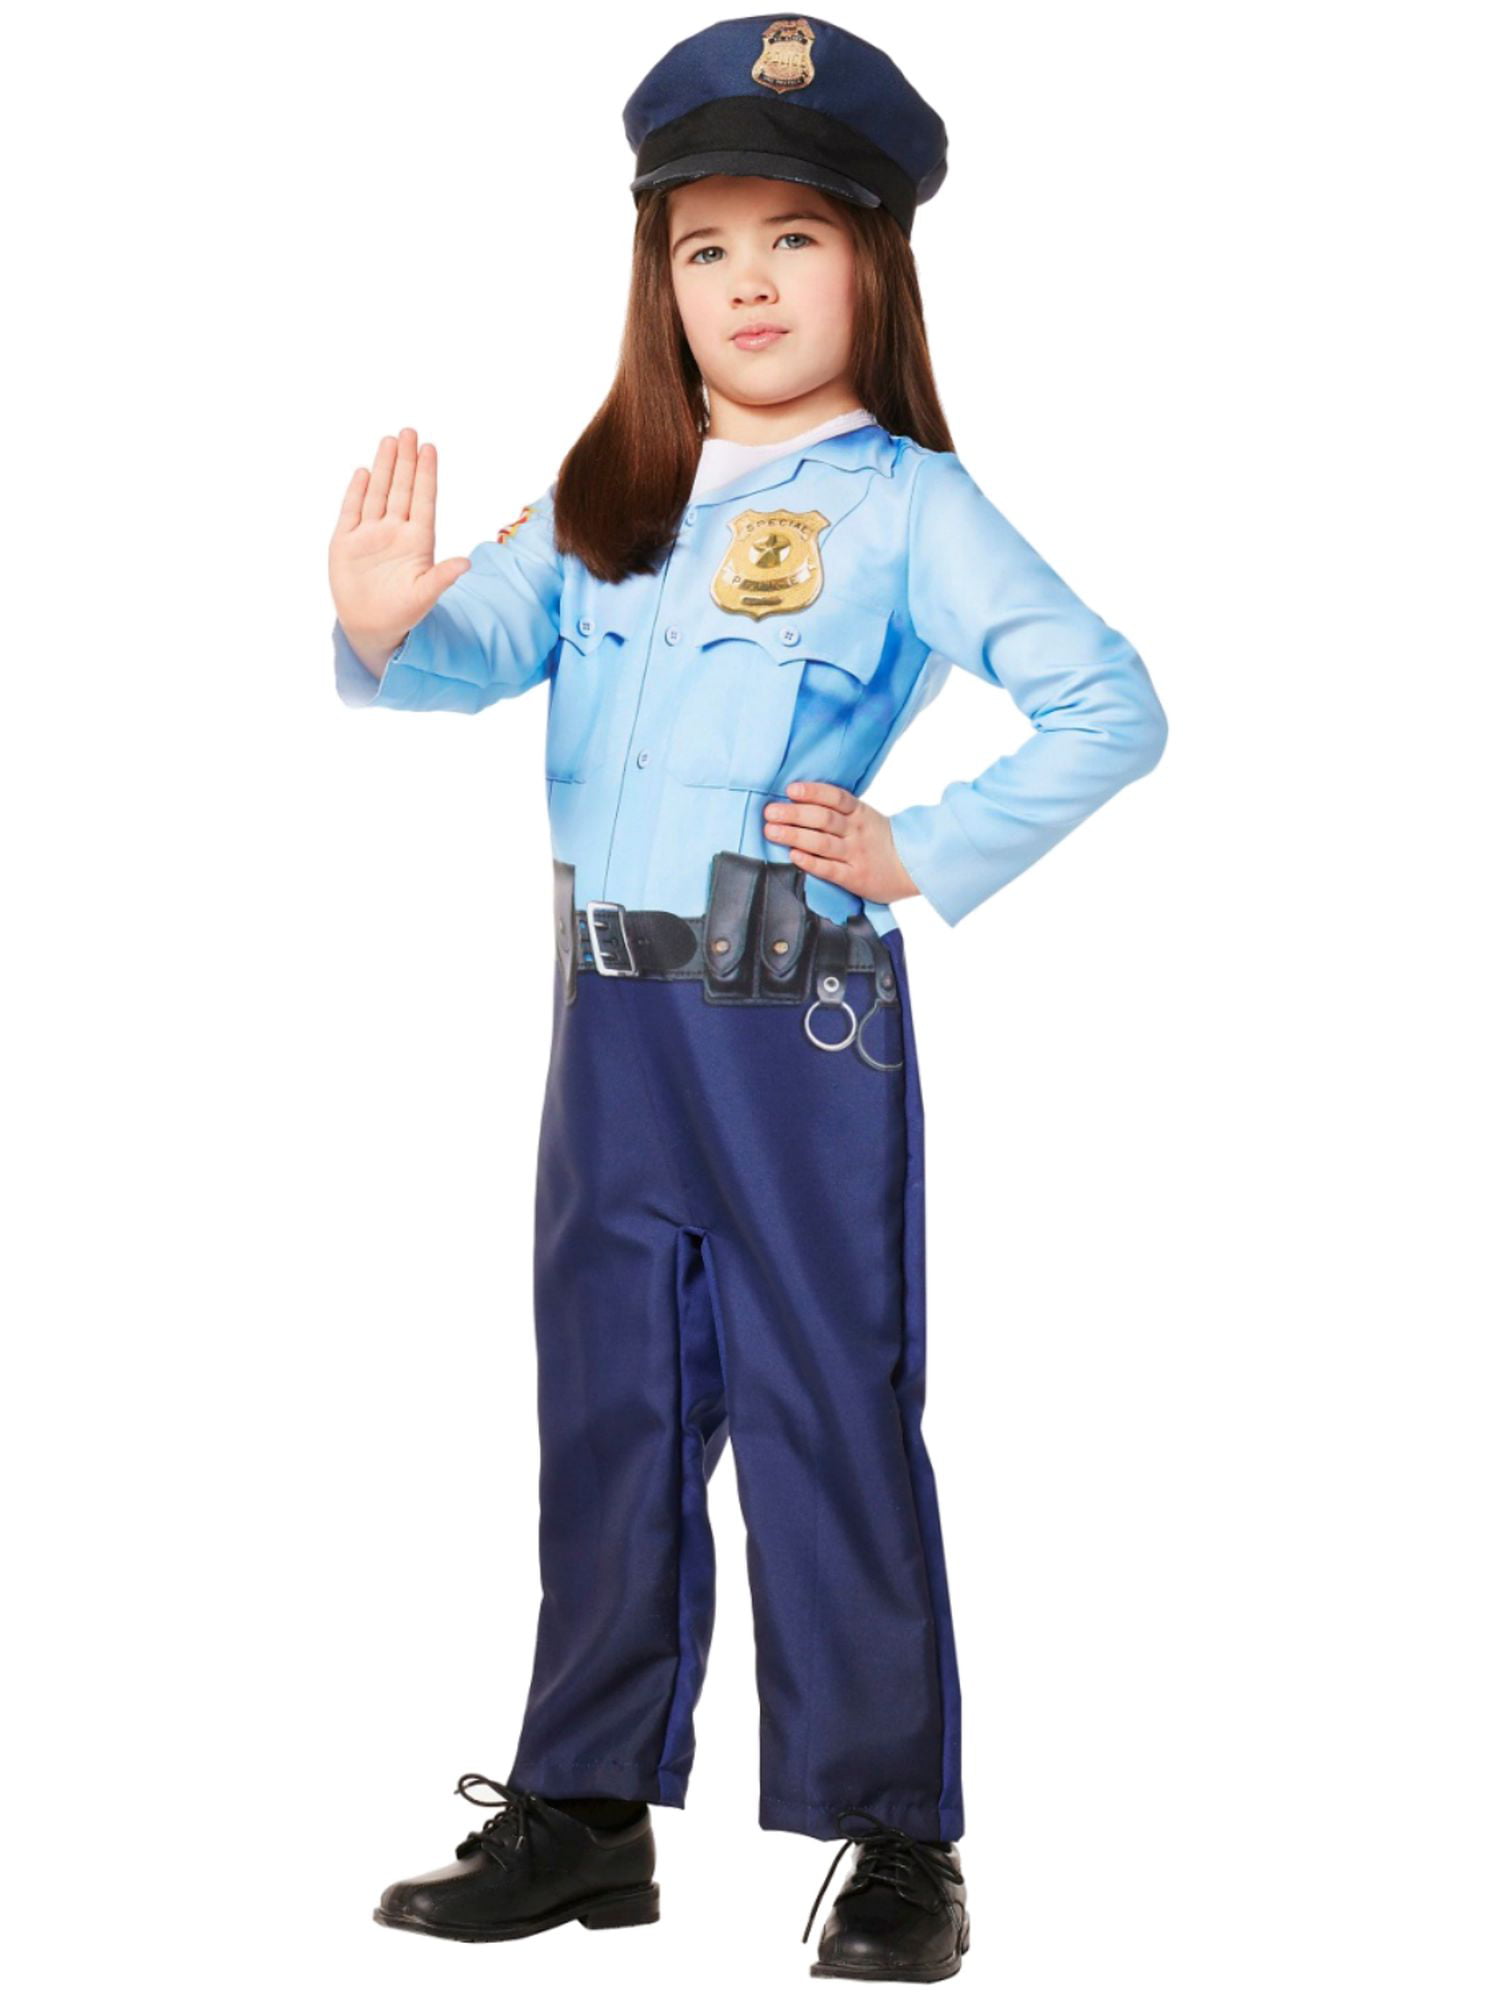 Toddler police costume